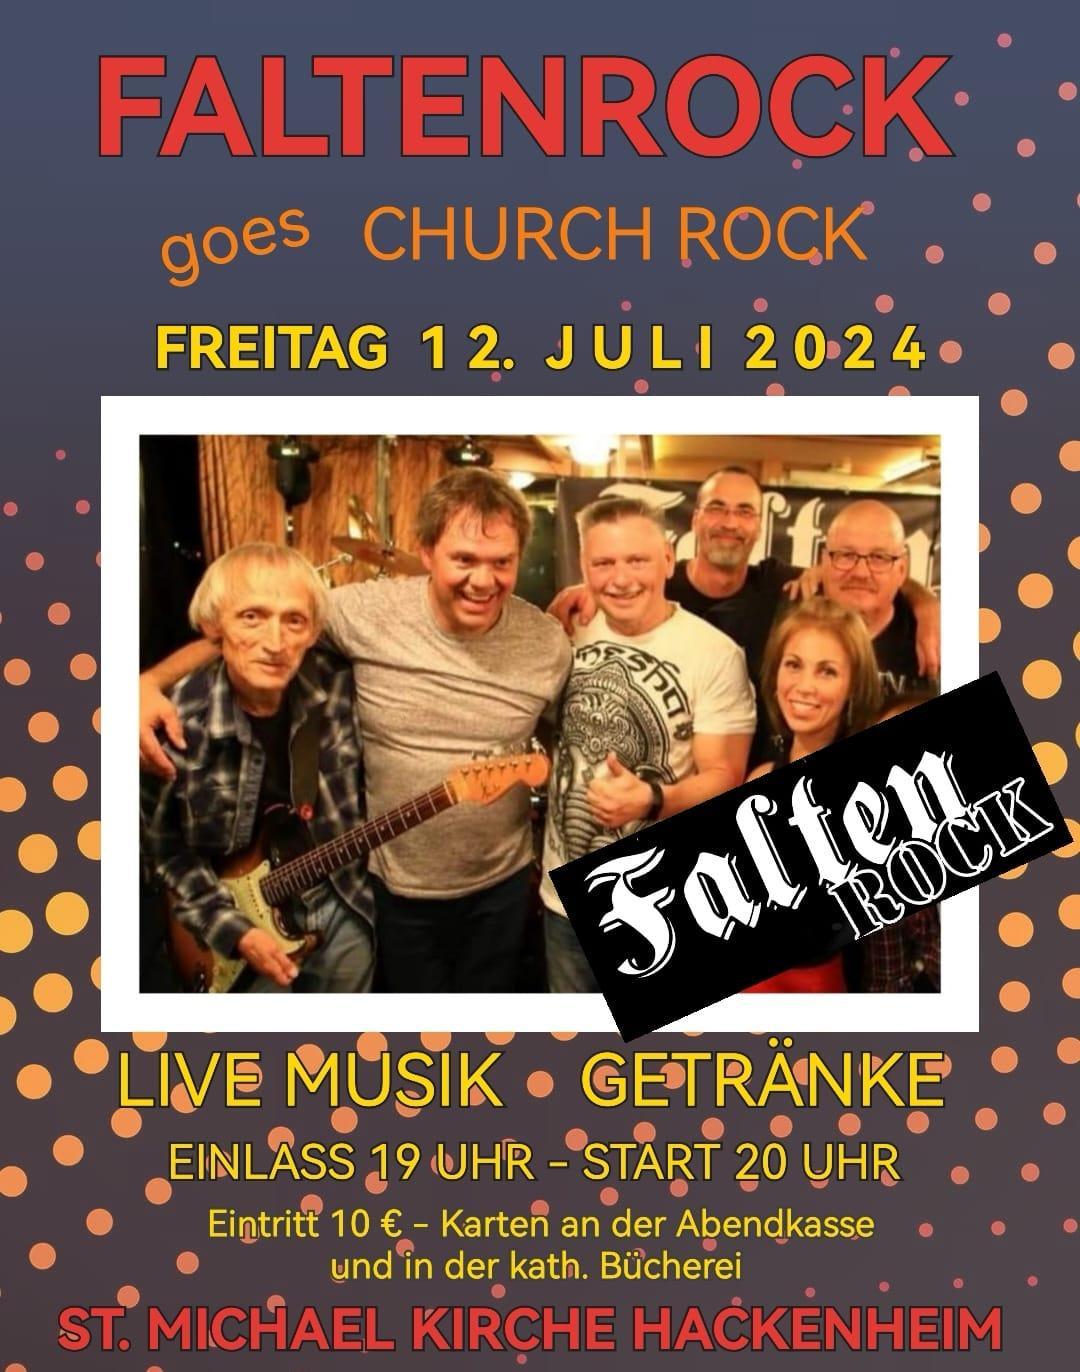 FALTENROCK goes CHURCH ROCK (c) Faltenrock